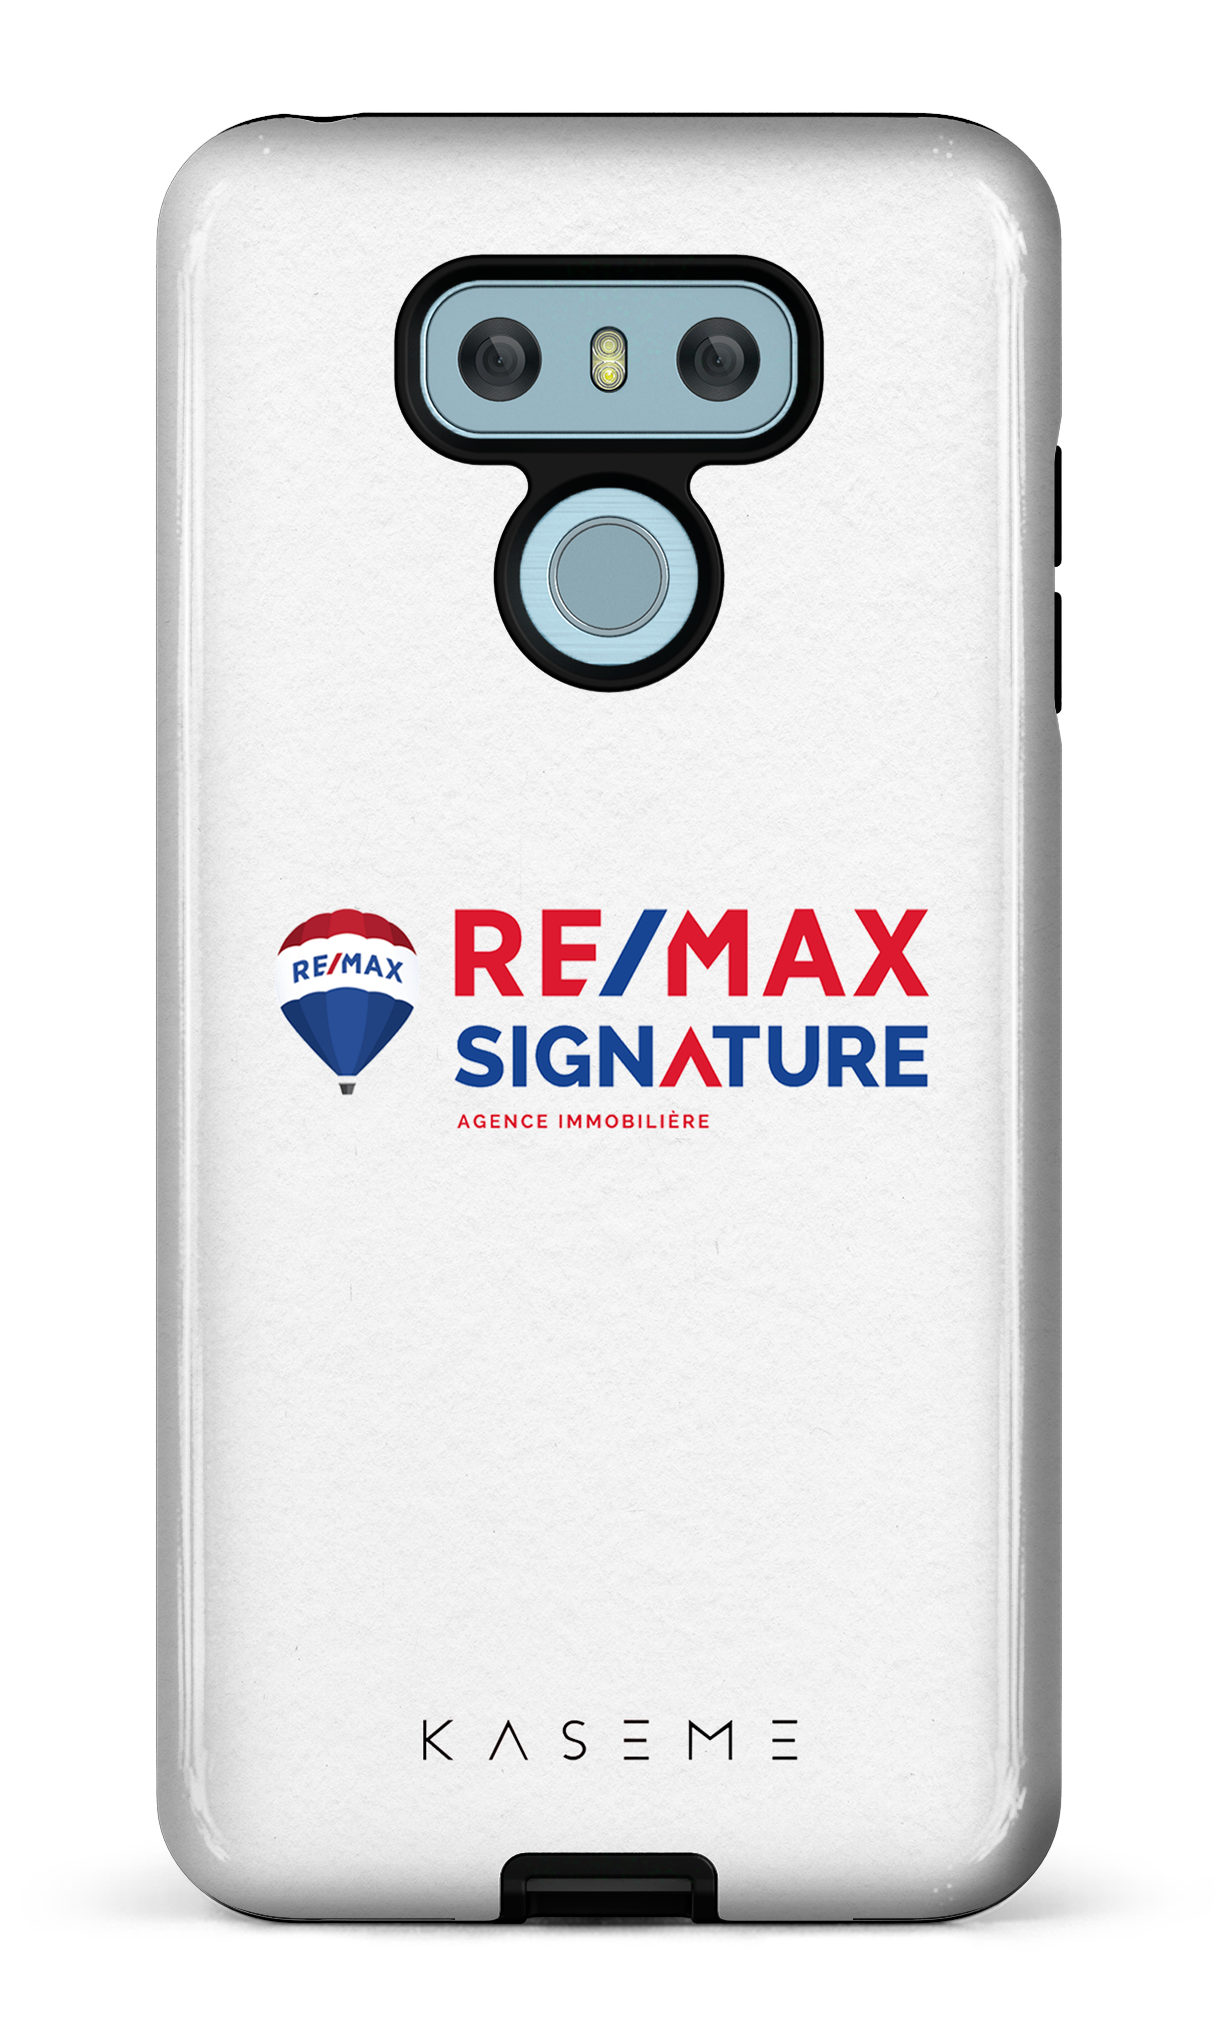 Remax Signature Blanc - LG G6